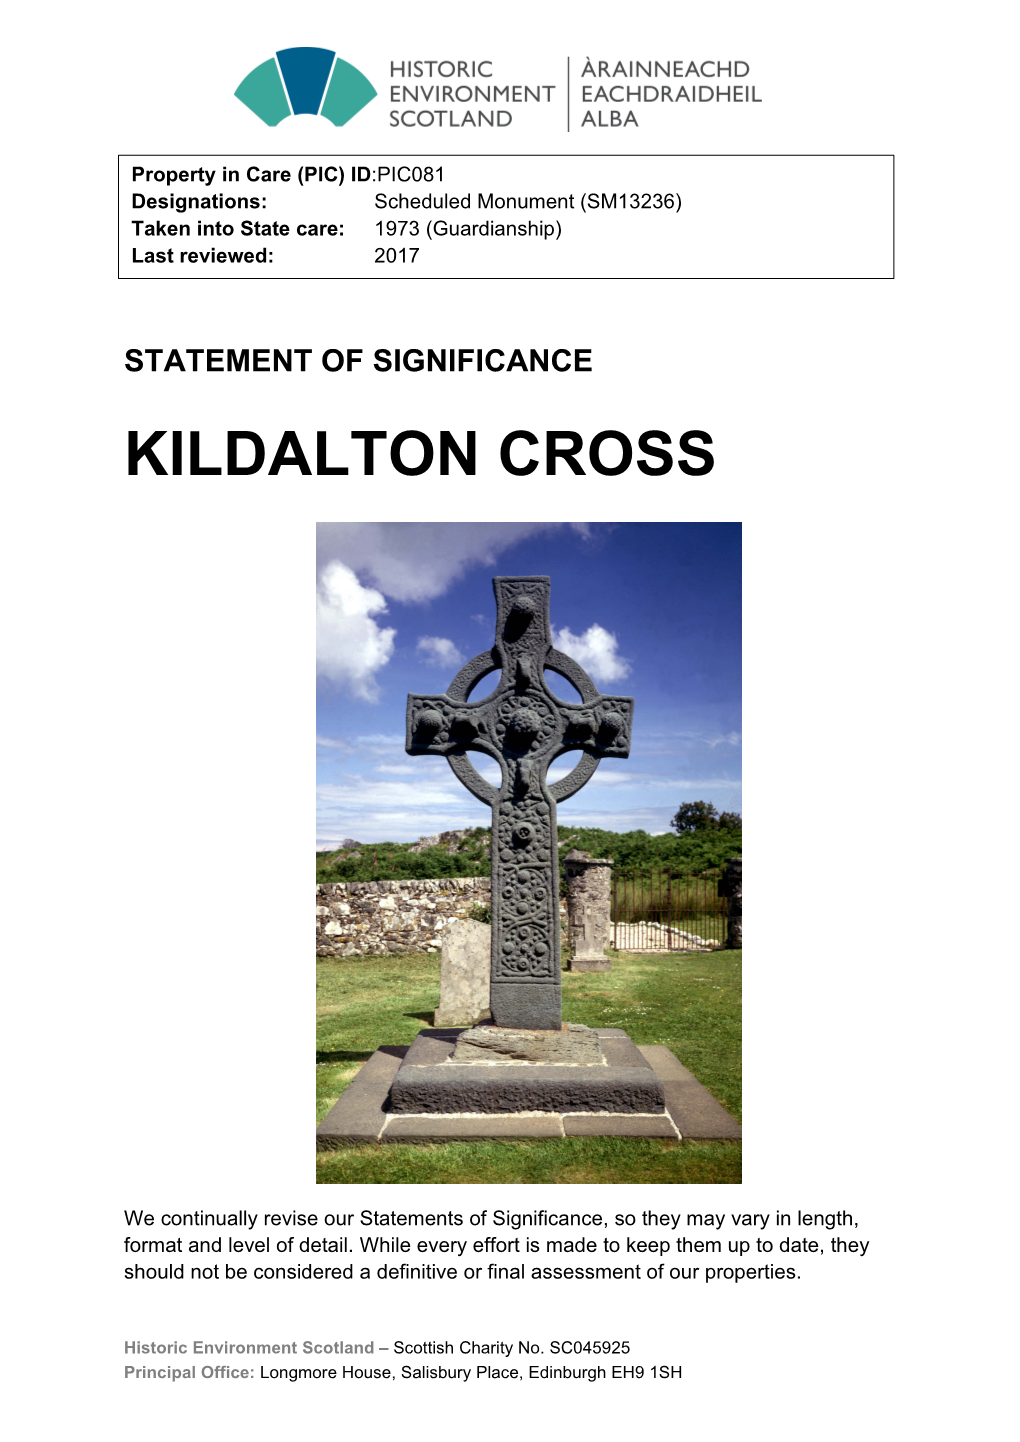 Kildalton Cross Statement of Significance